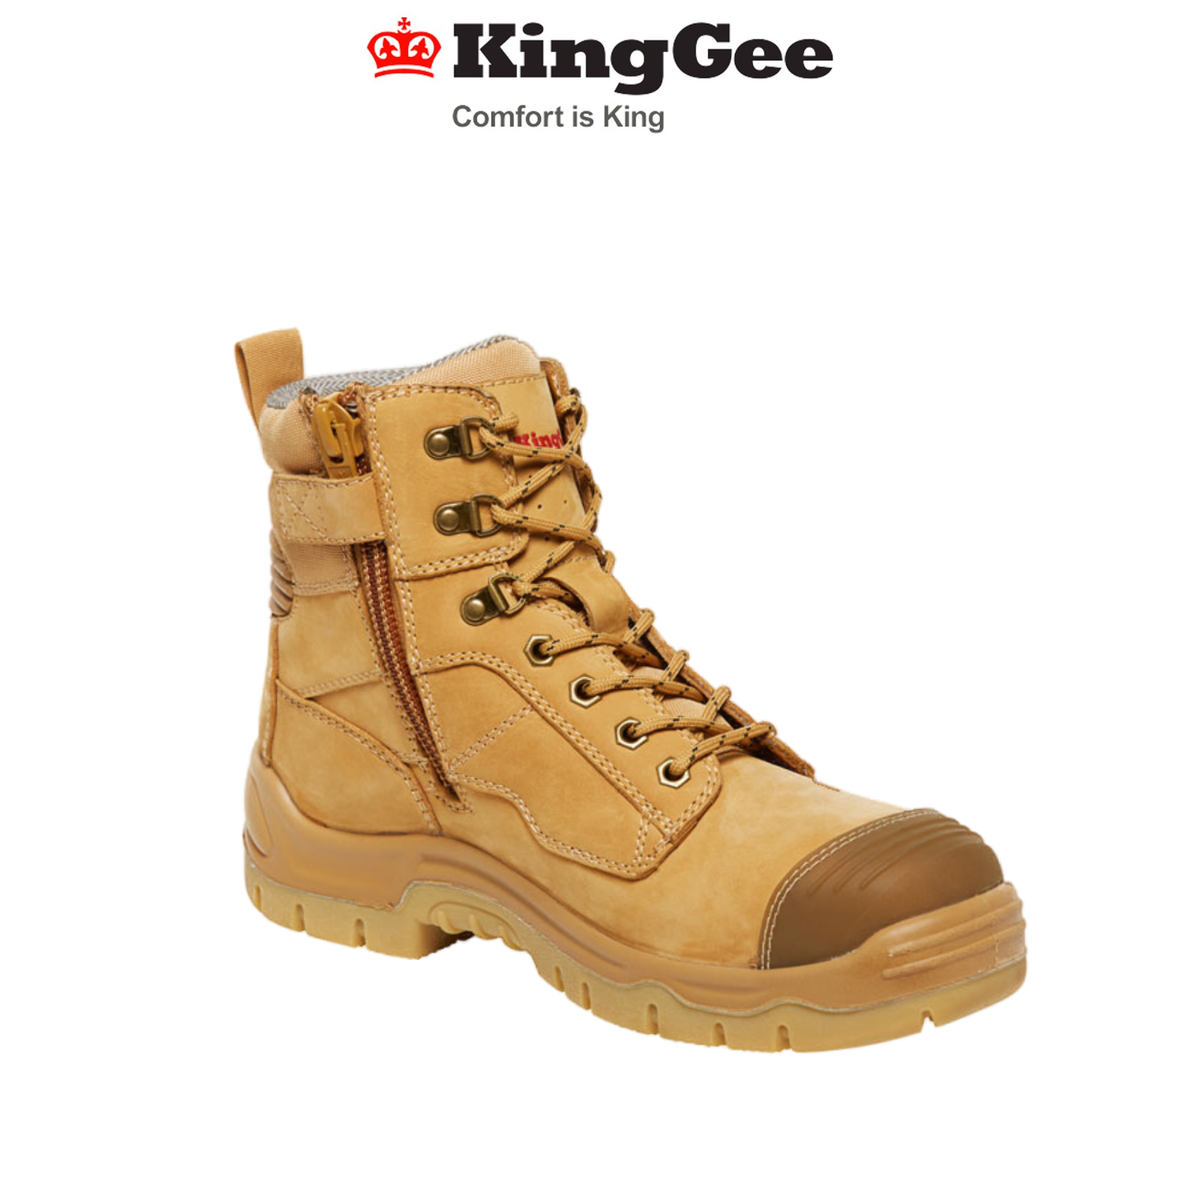 KingGee Mens Phoenix 6Z Side UP Work Safety Boots Nubuck Leather Comfy K27880